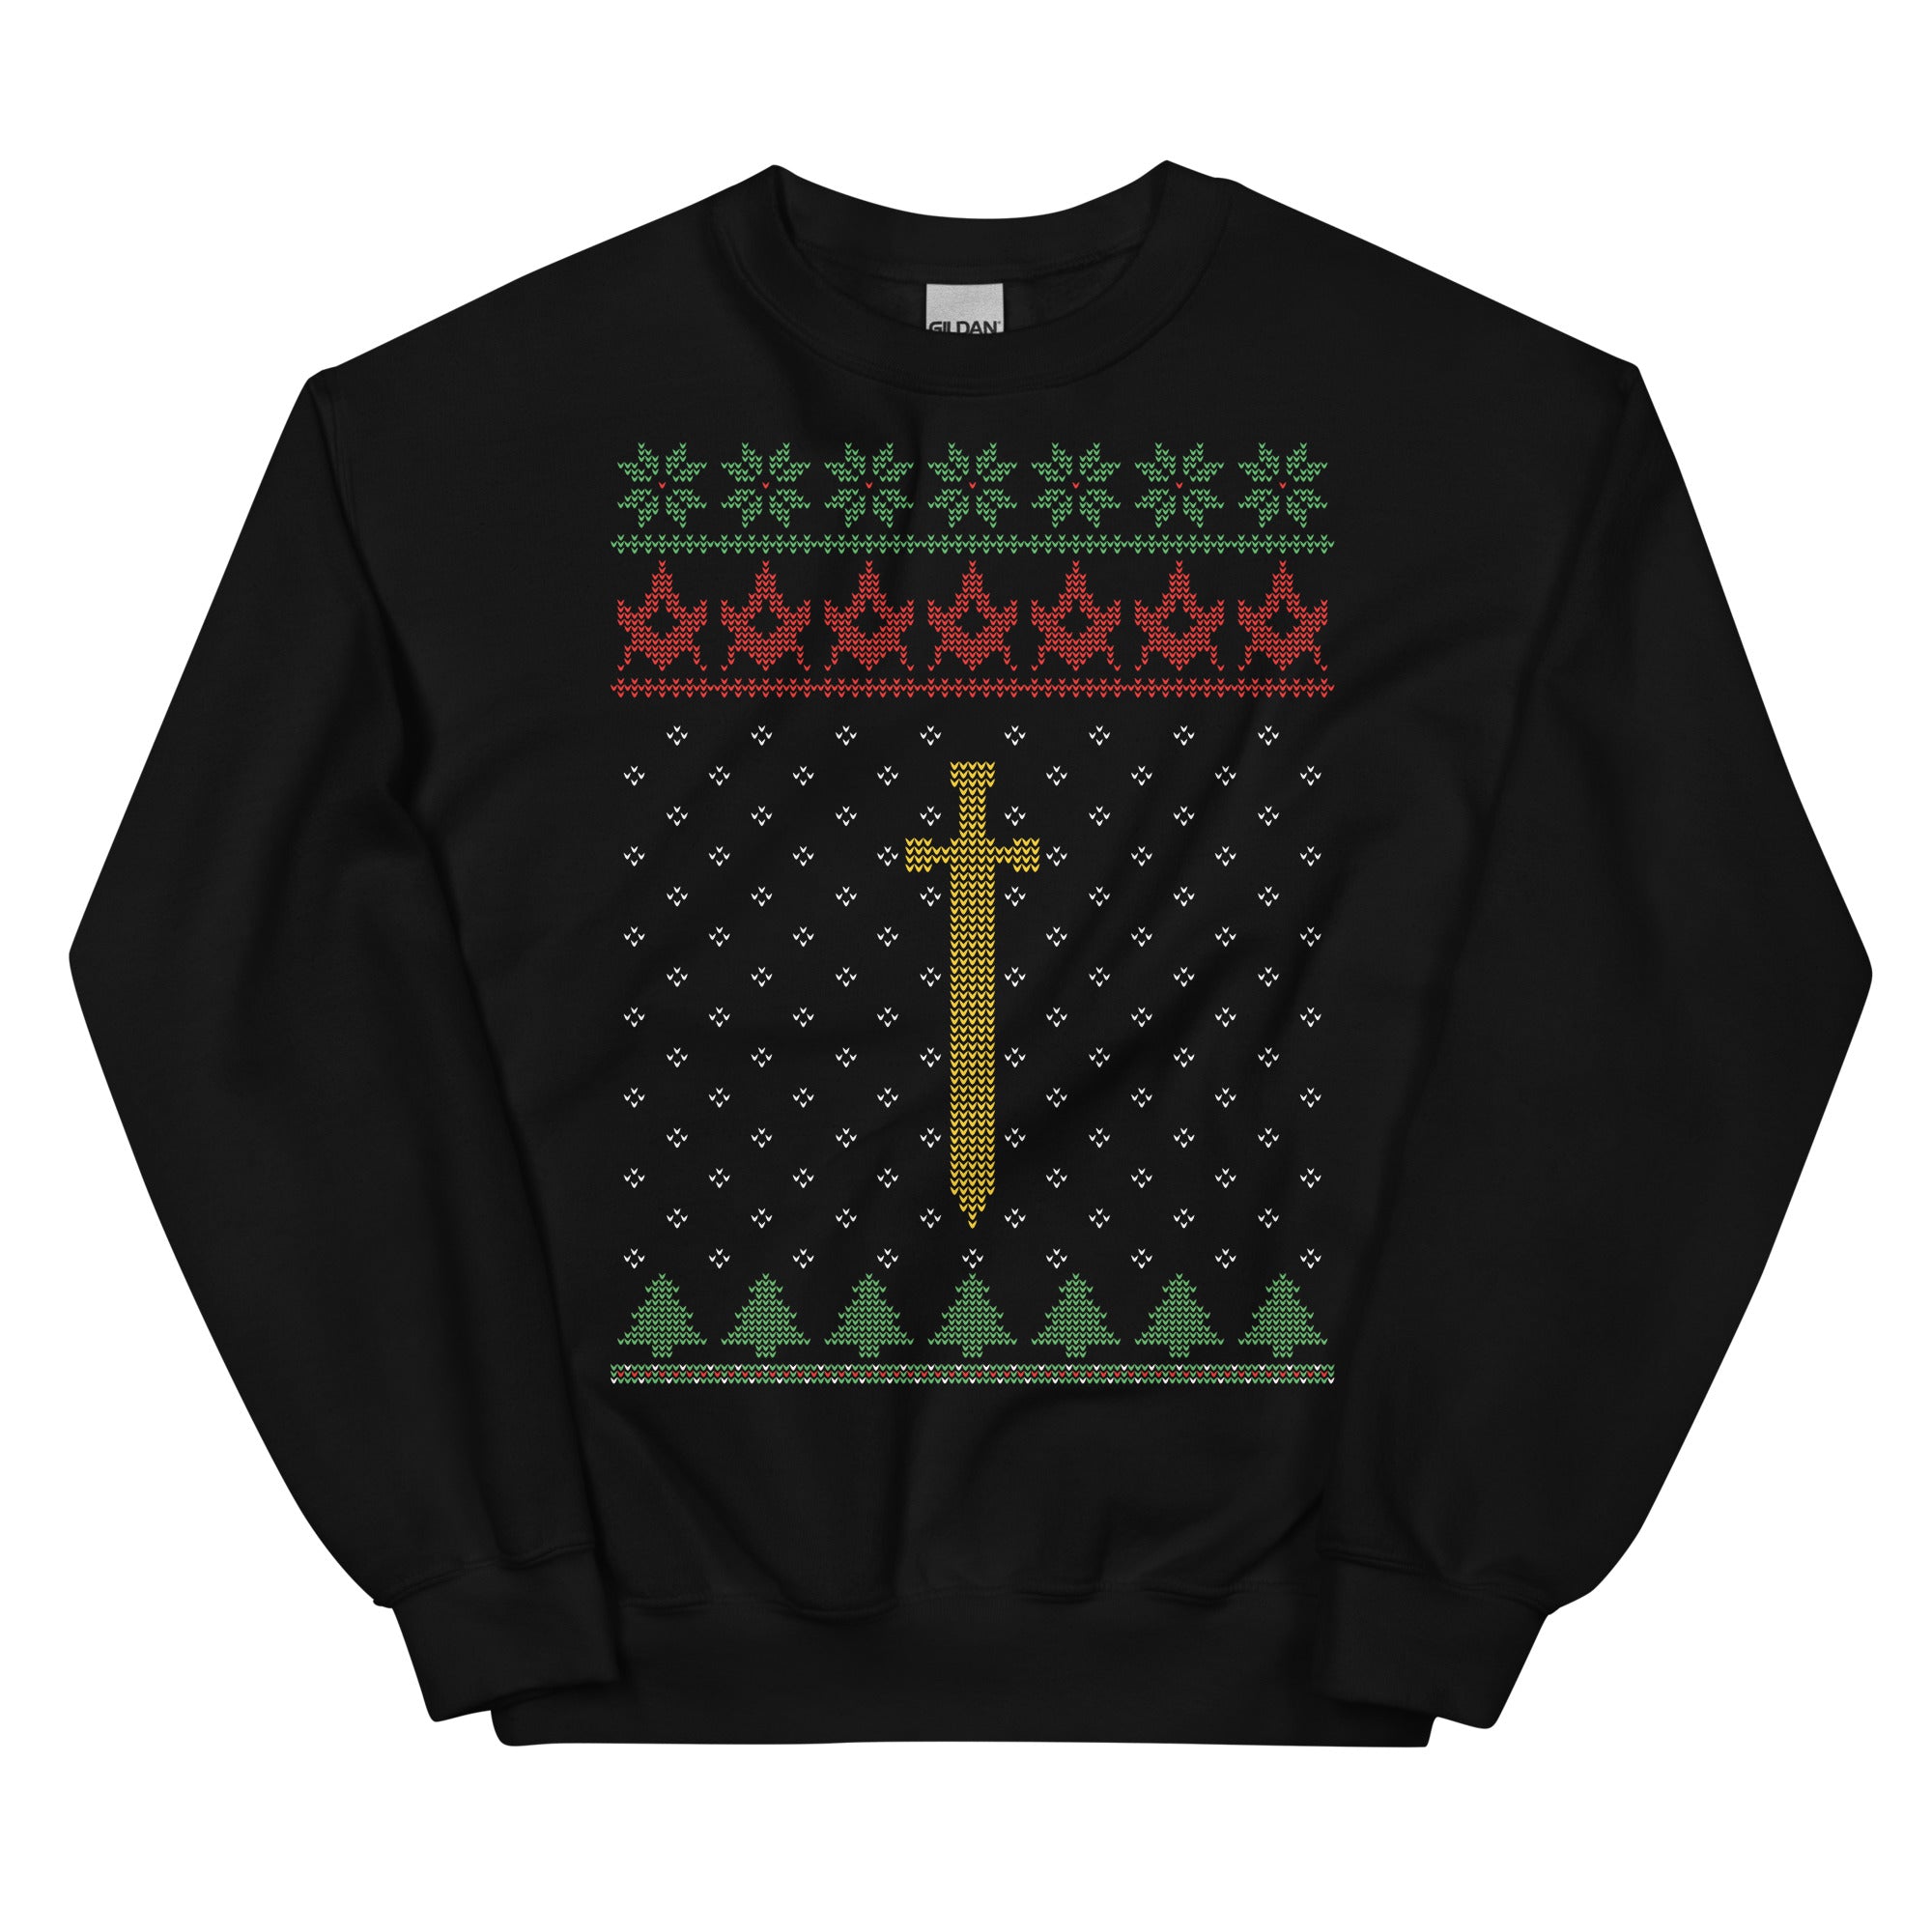 Tyler's Christmas Sweater